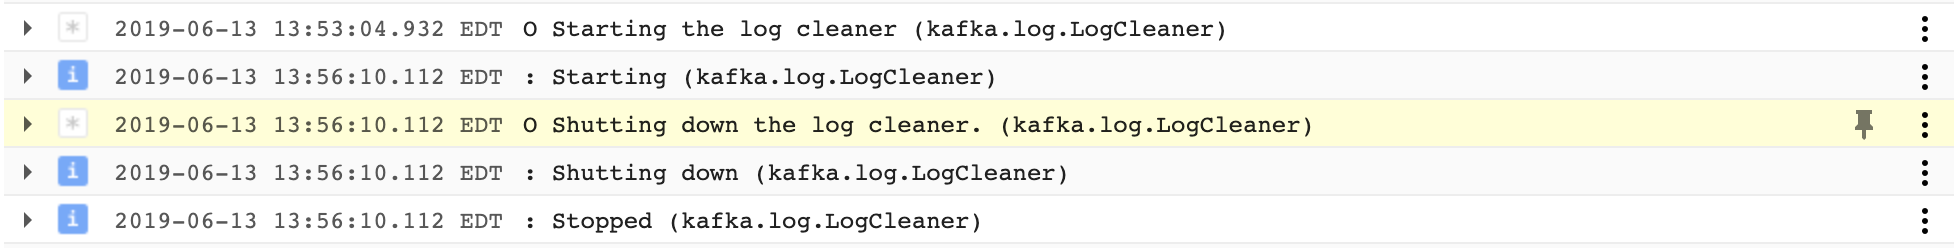 Apache Kafka Log_Cleaner Logs Example